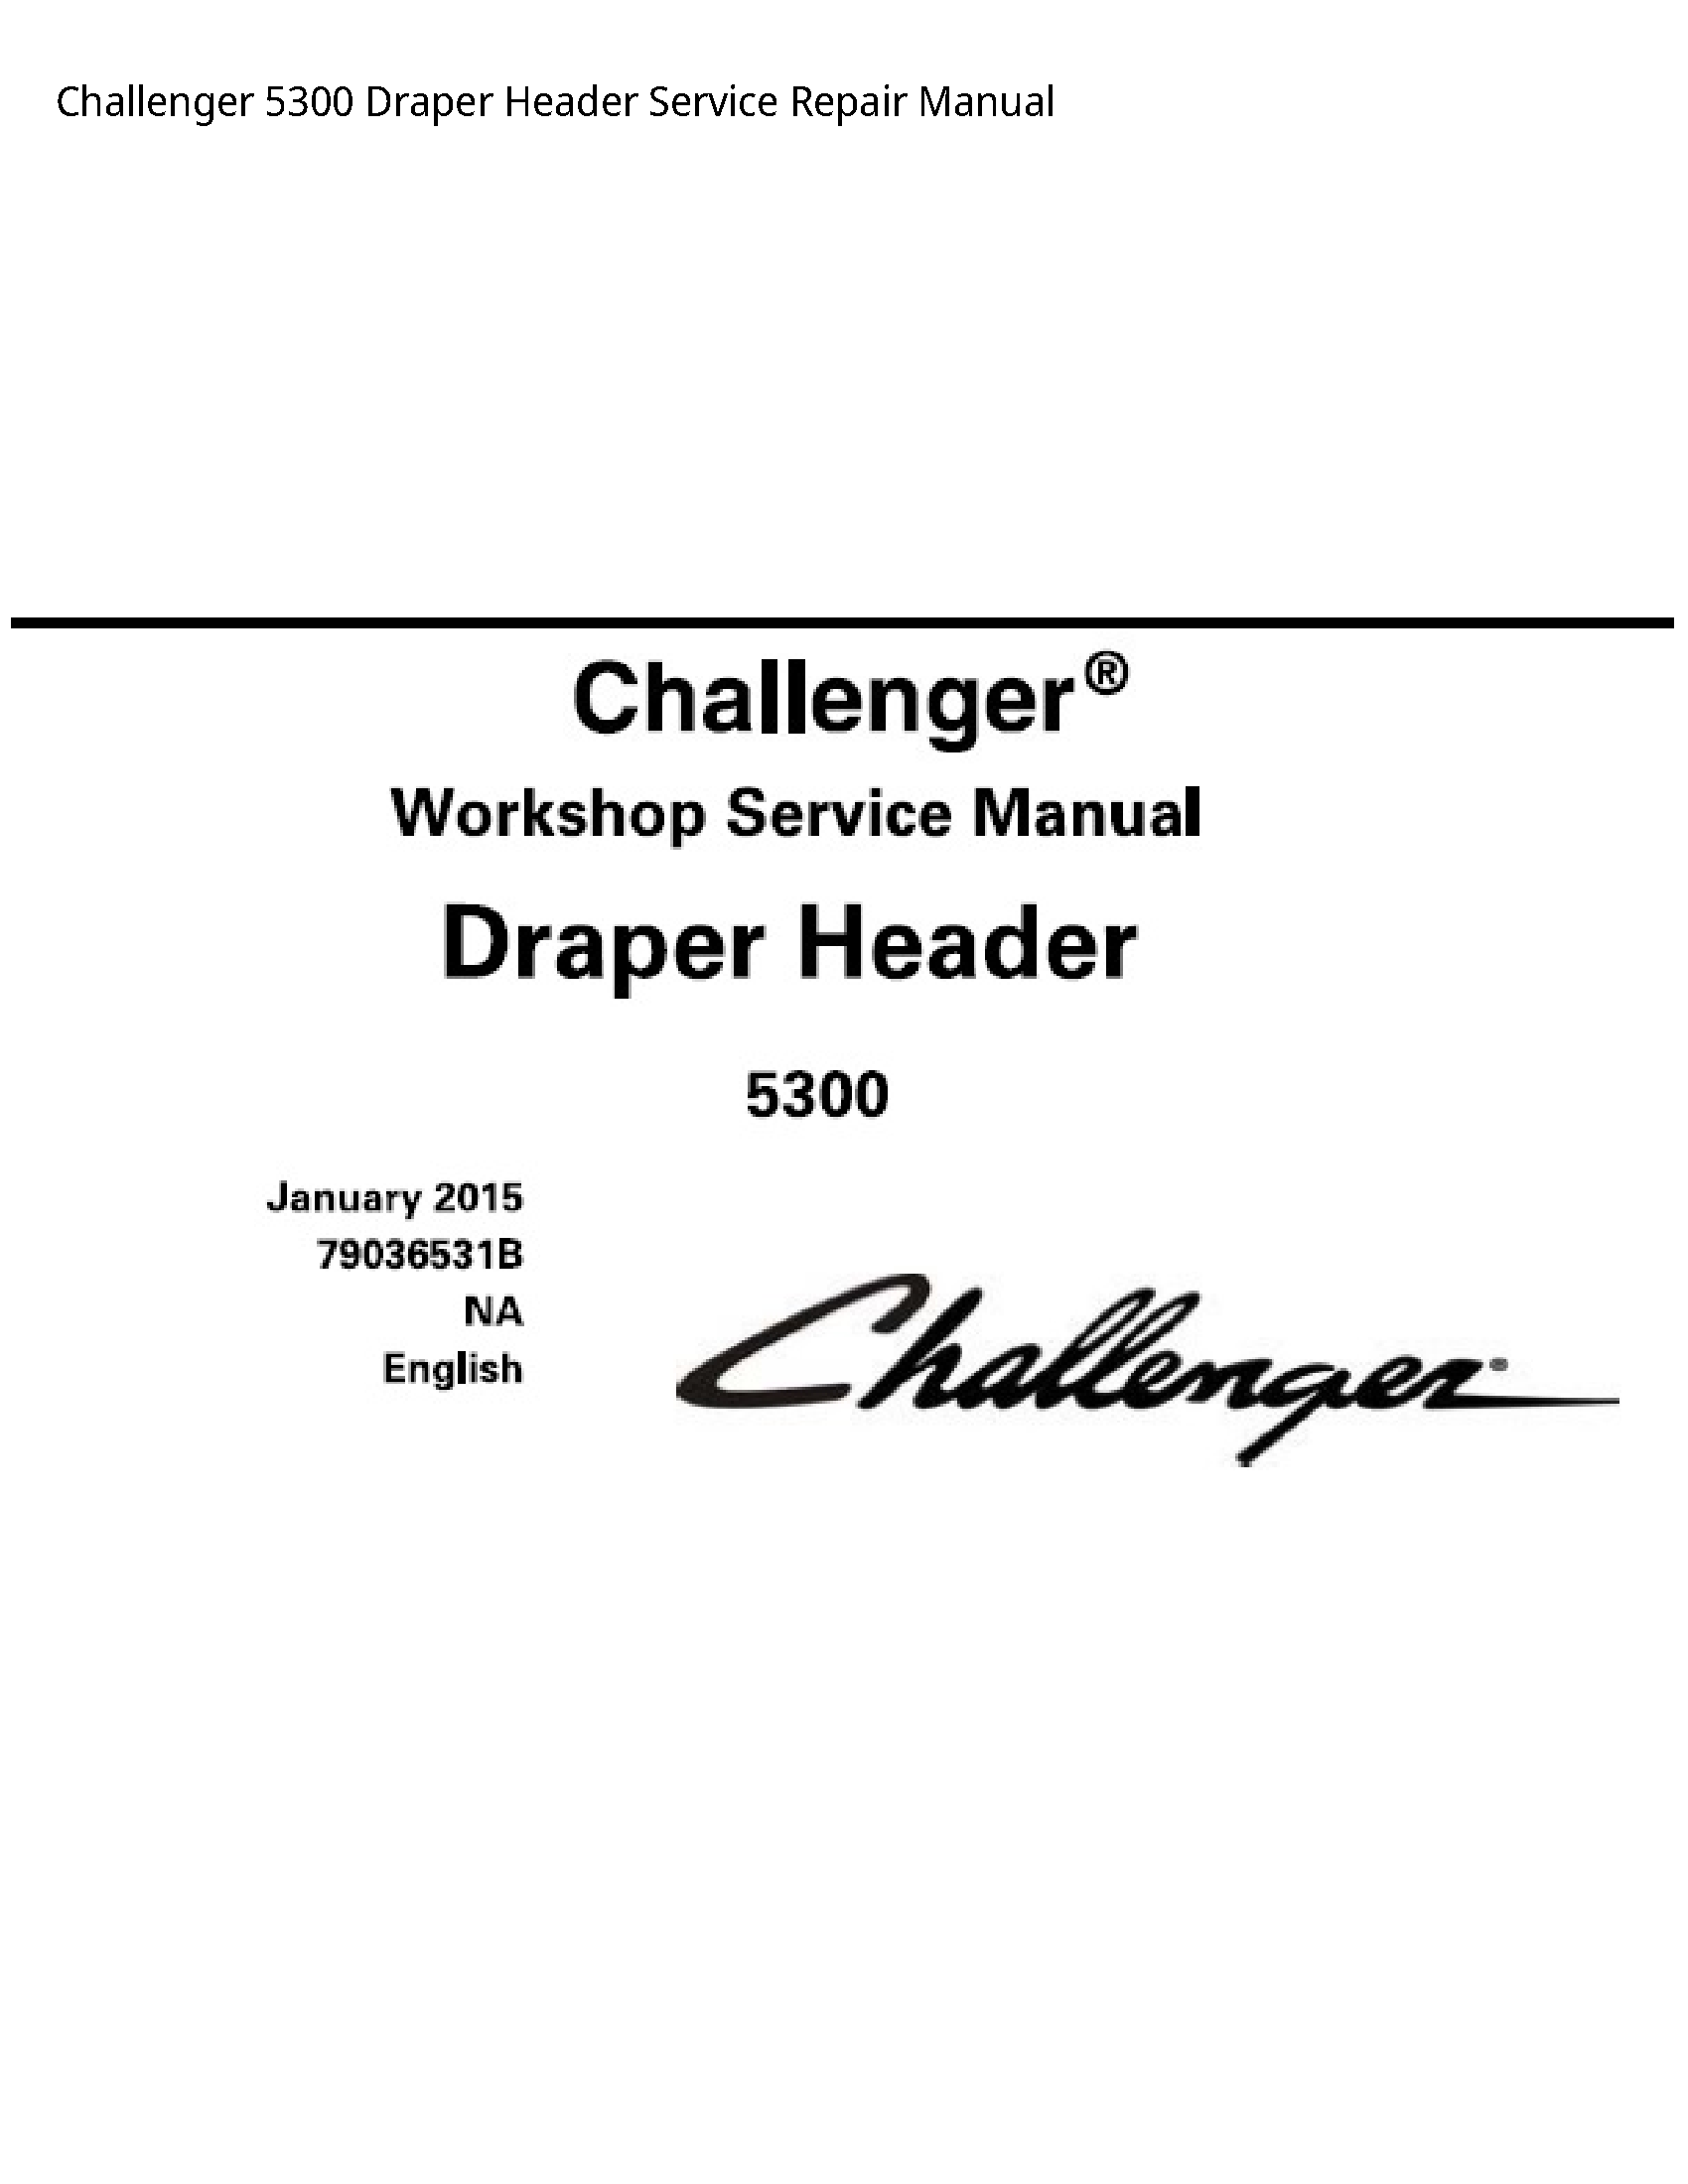 Challenger 5300 Draper Header manual